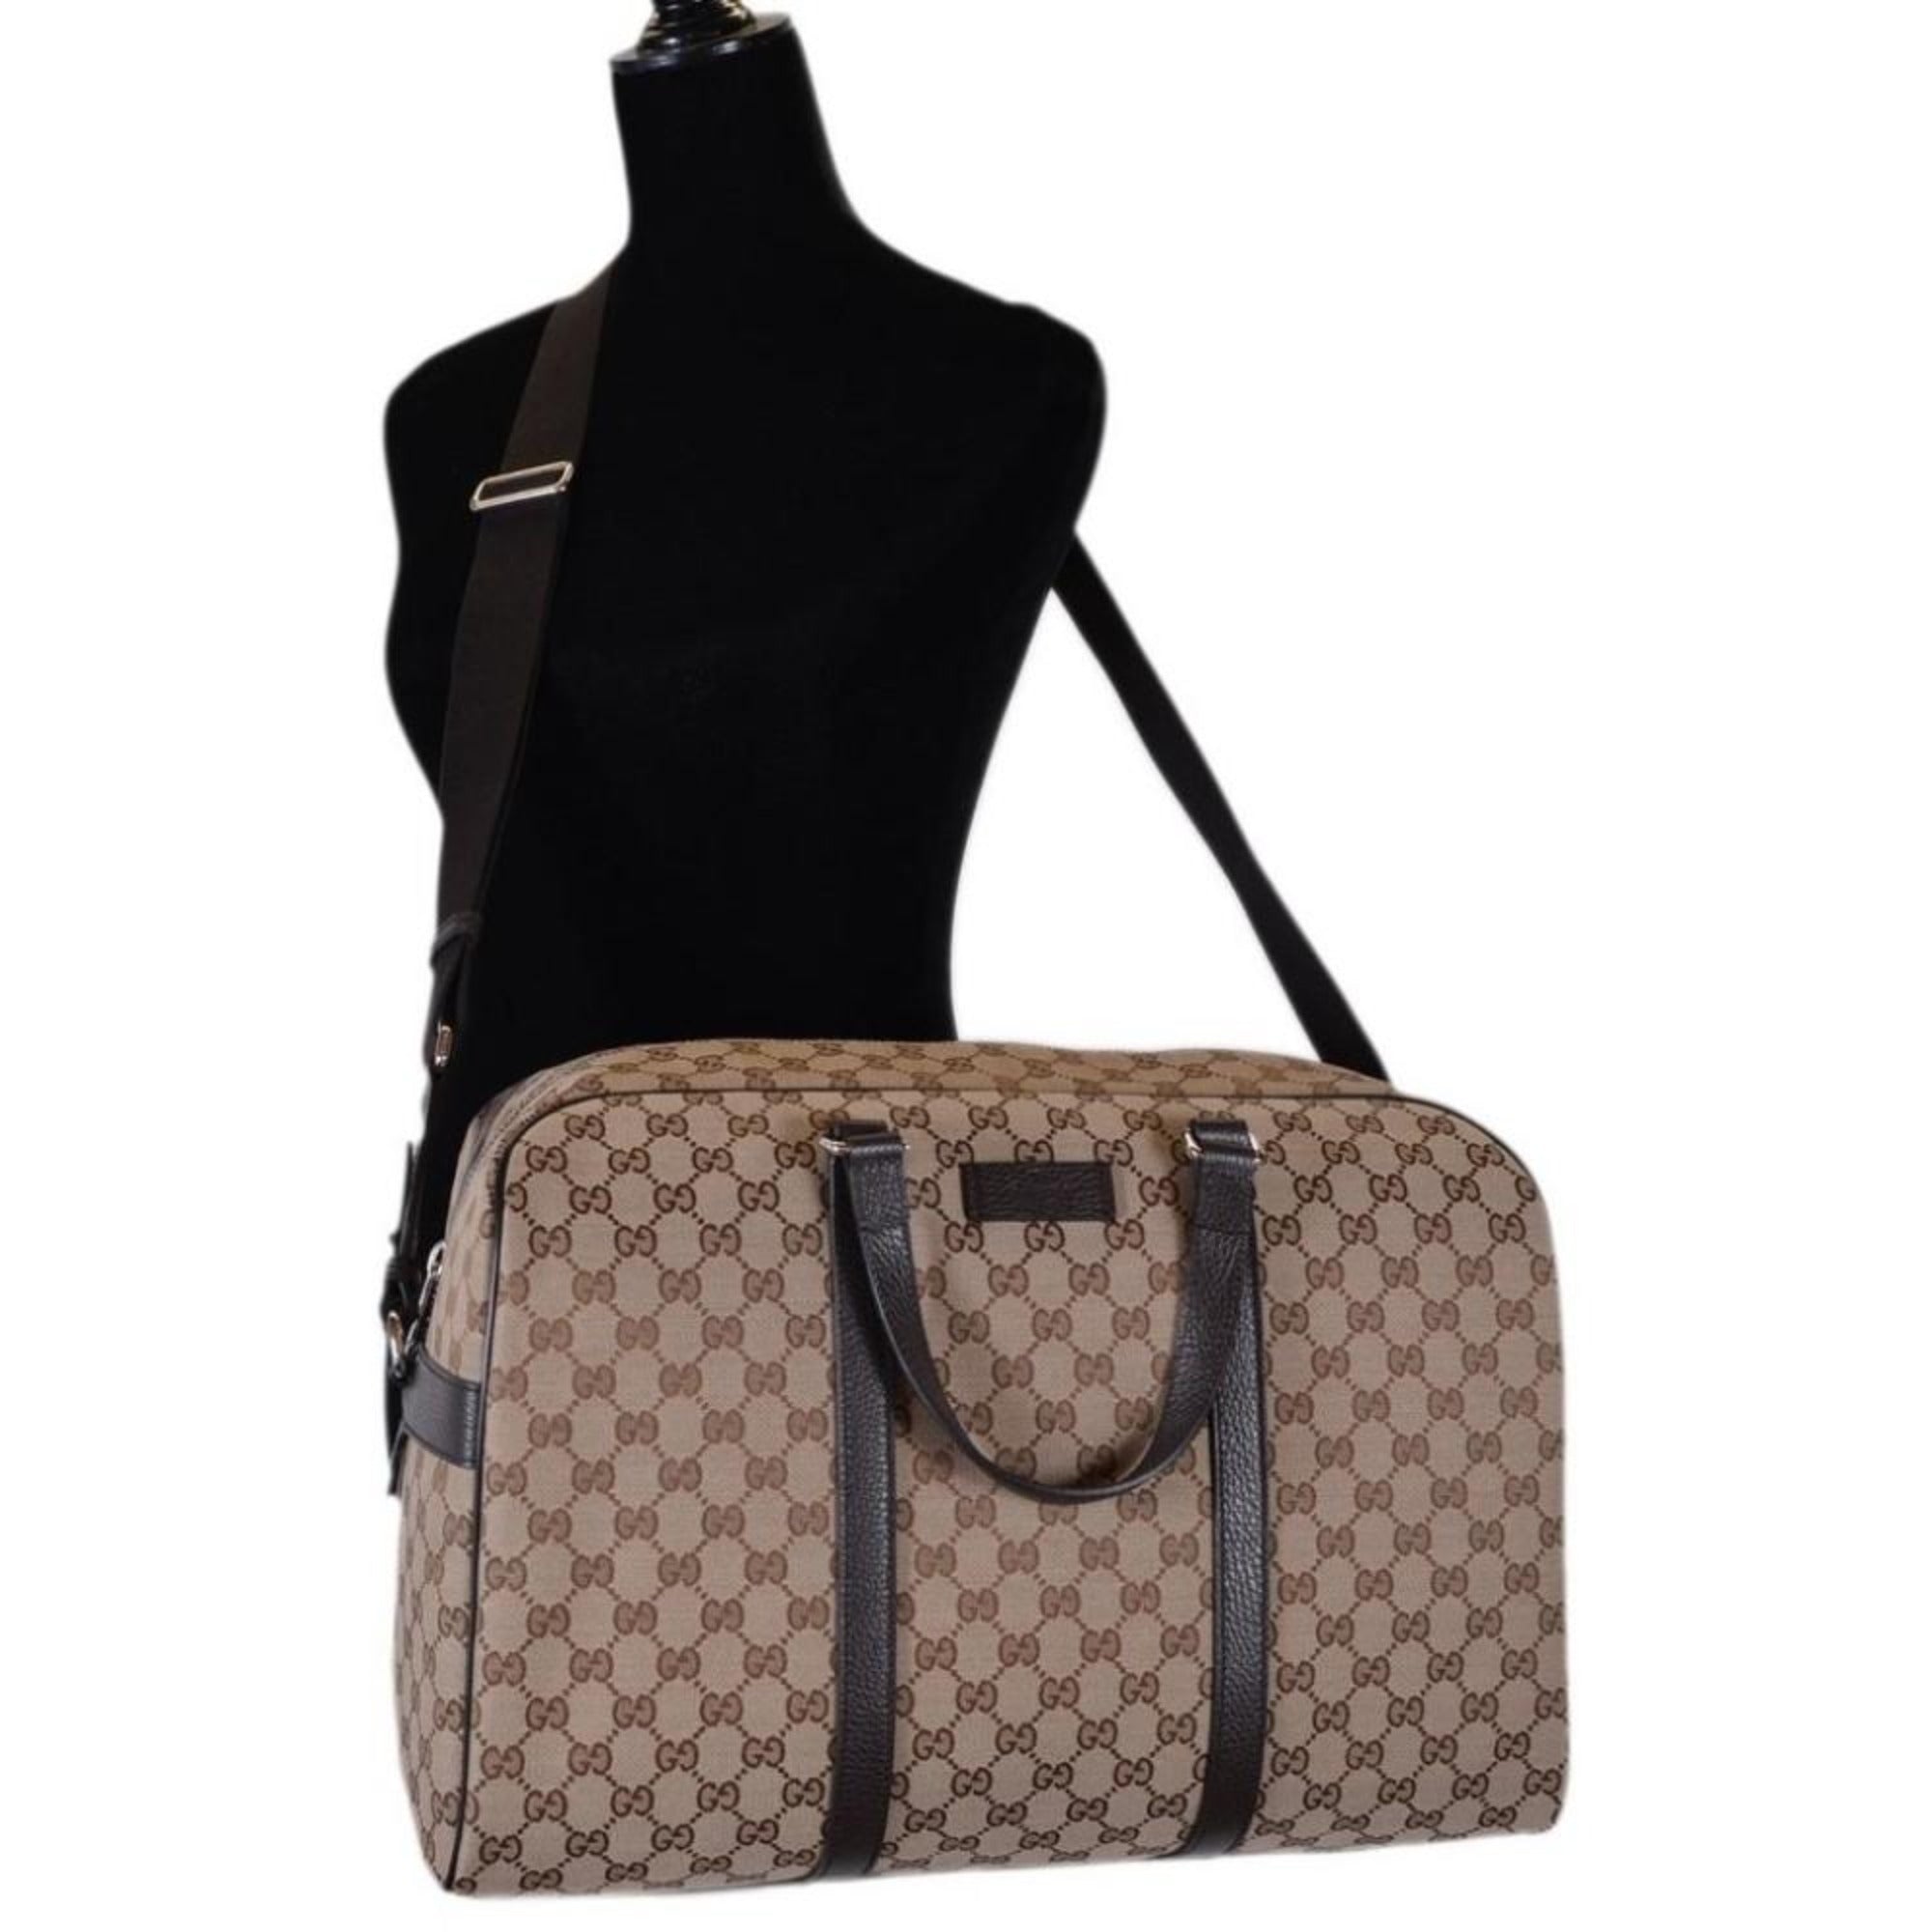 Gucci Supreme Web Duffle Bag 4gg1110